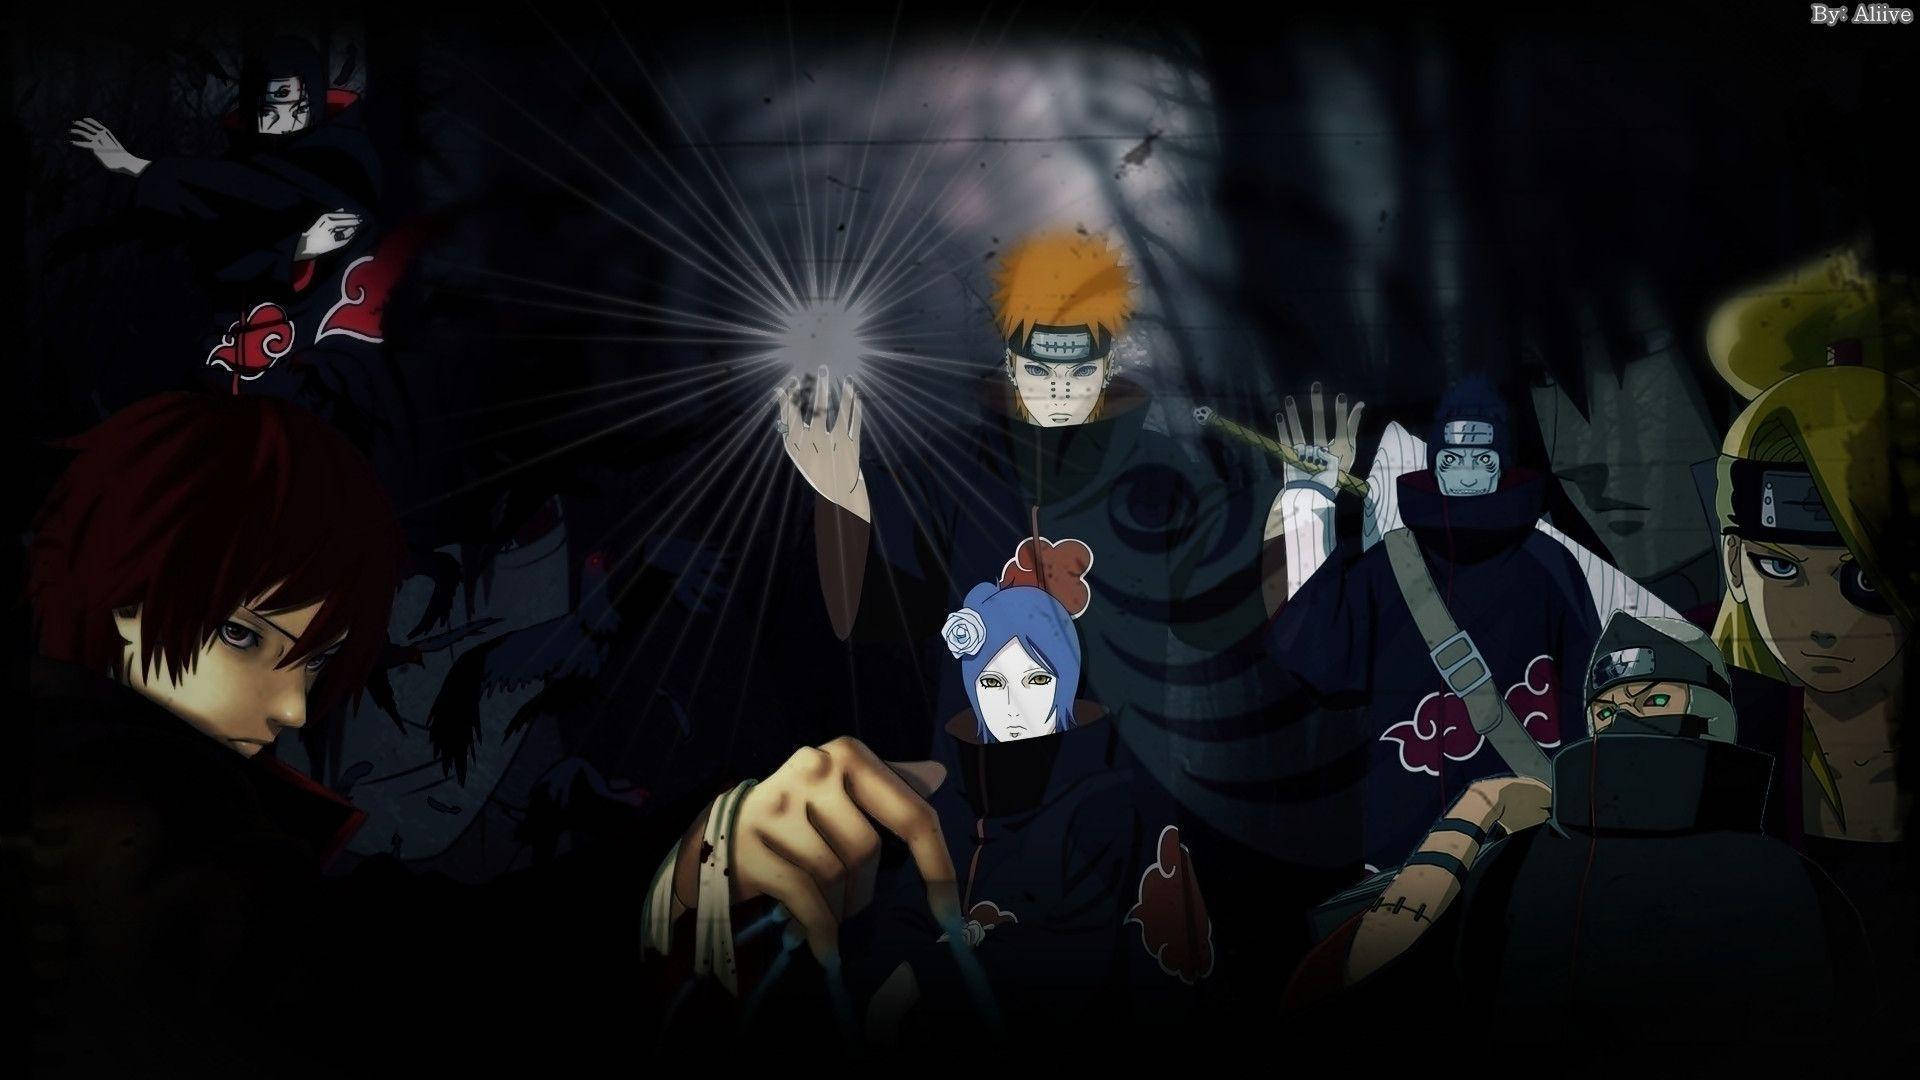 Akatsuki Group Of Naruto Shippuden Background